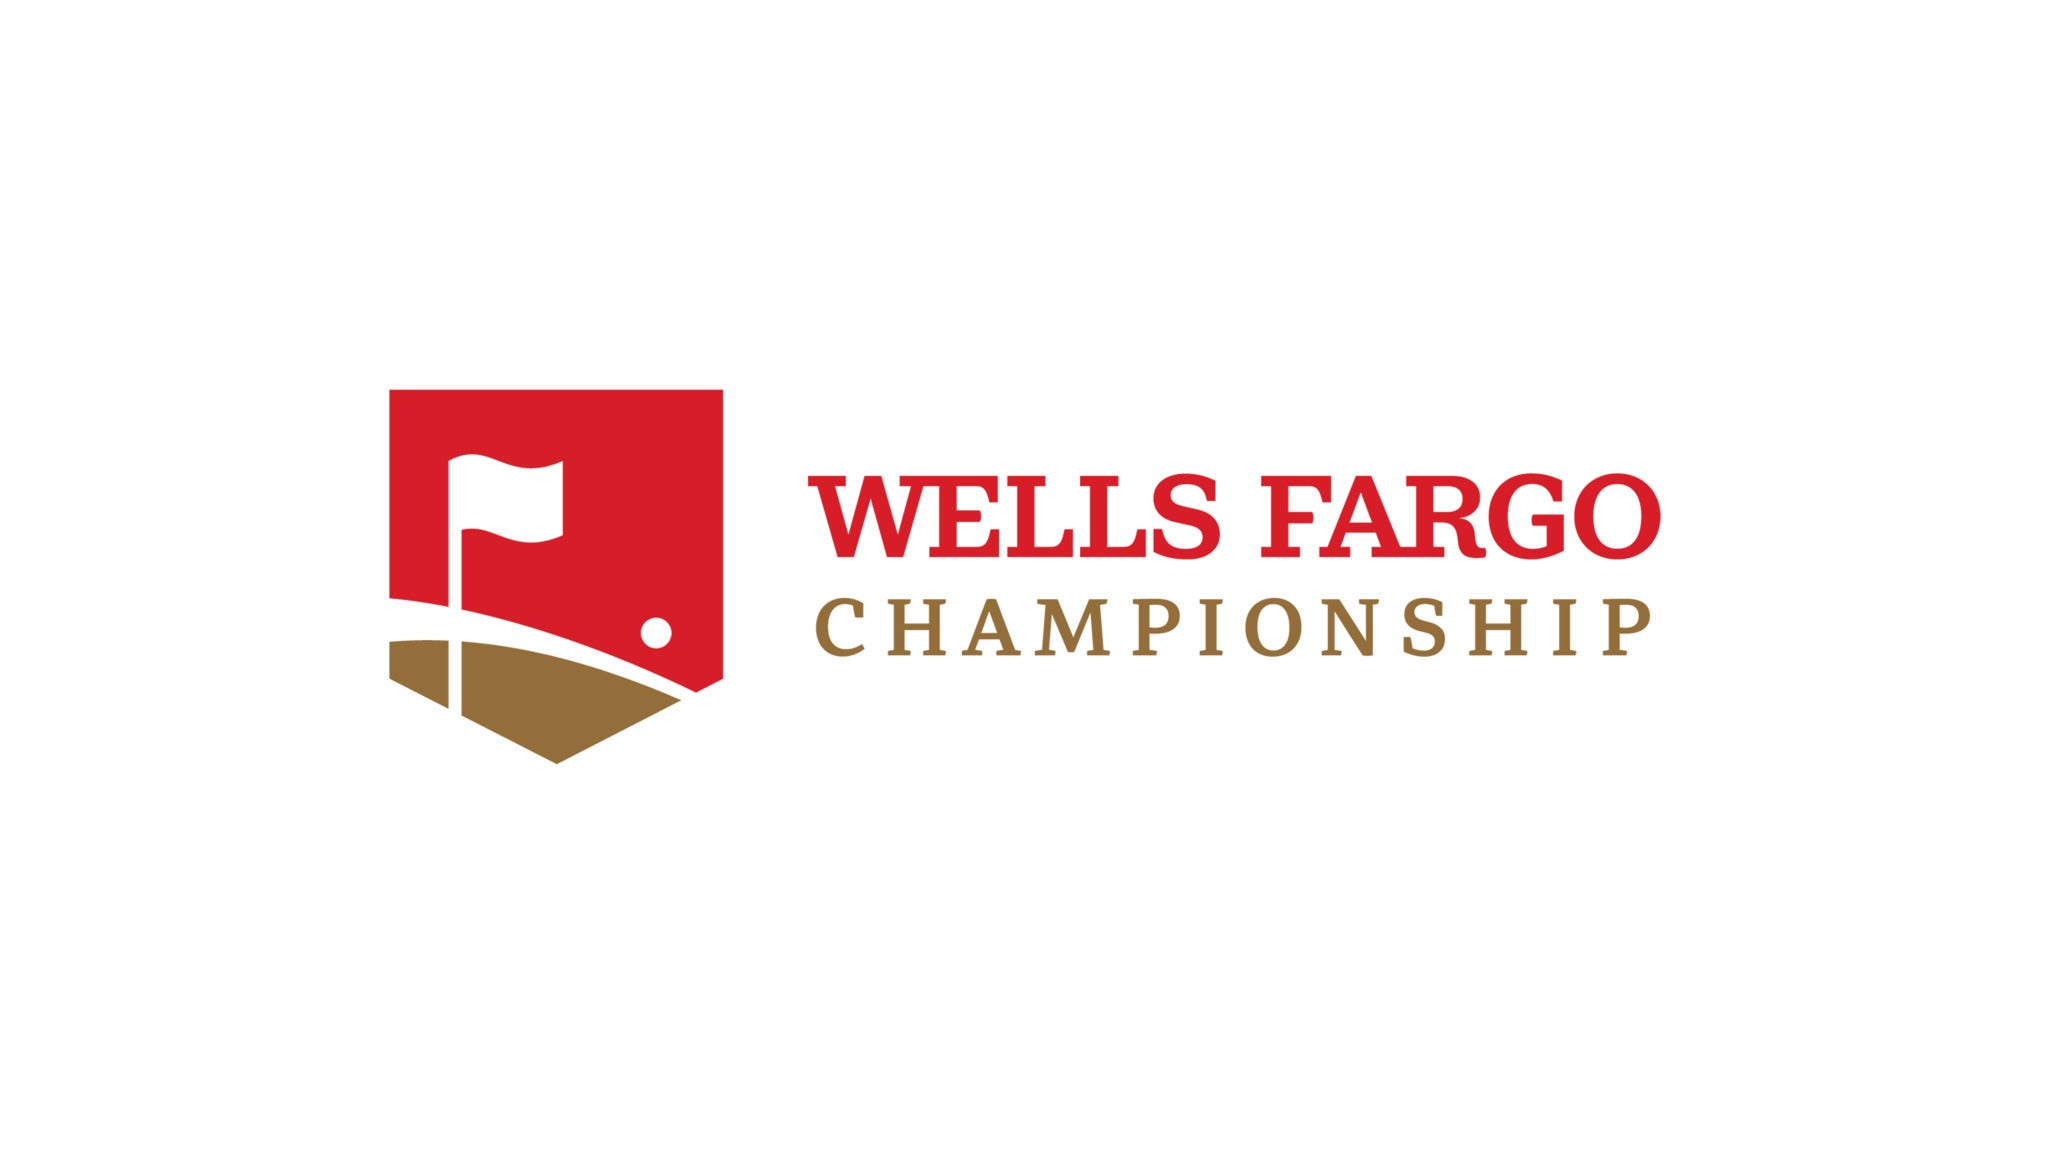 Friday Wells Fargo Championship in Potomac promo photo for Wells Fargo Championship presale offer code